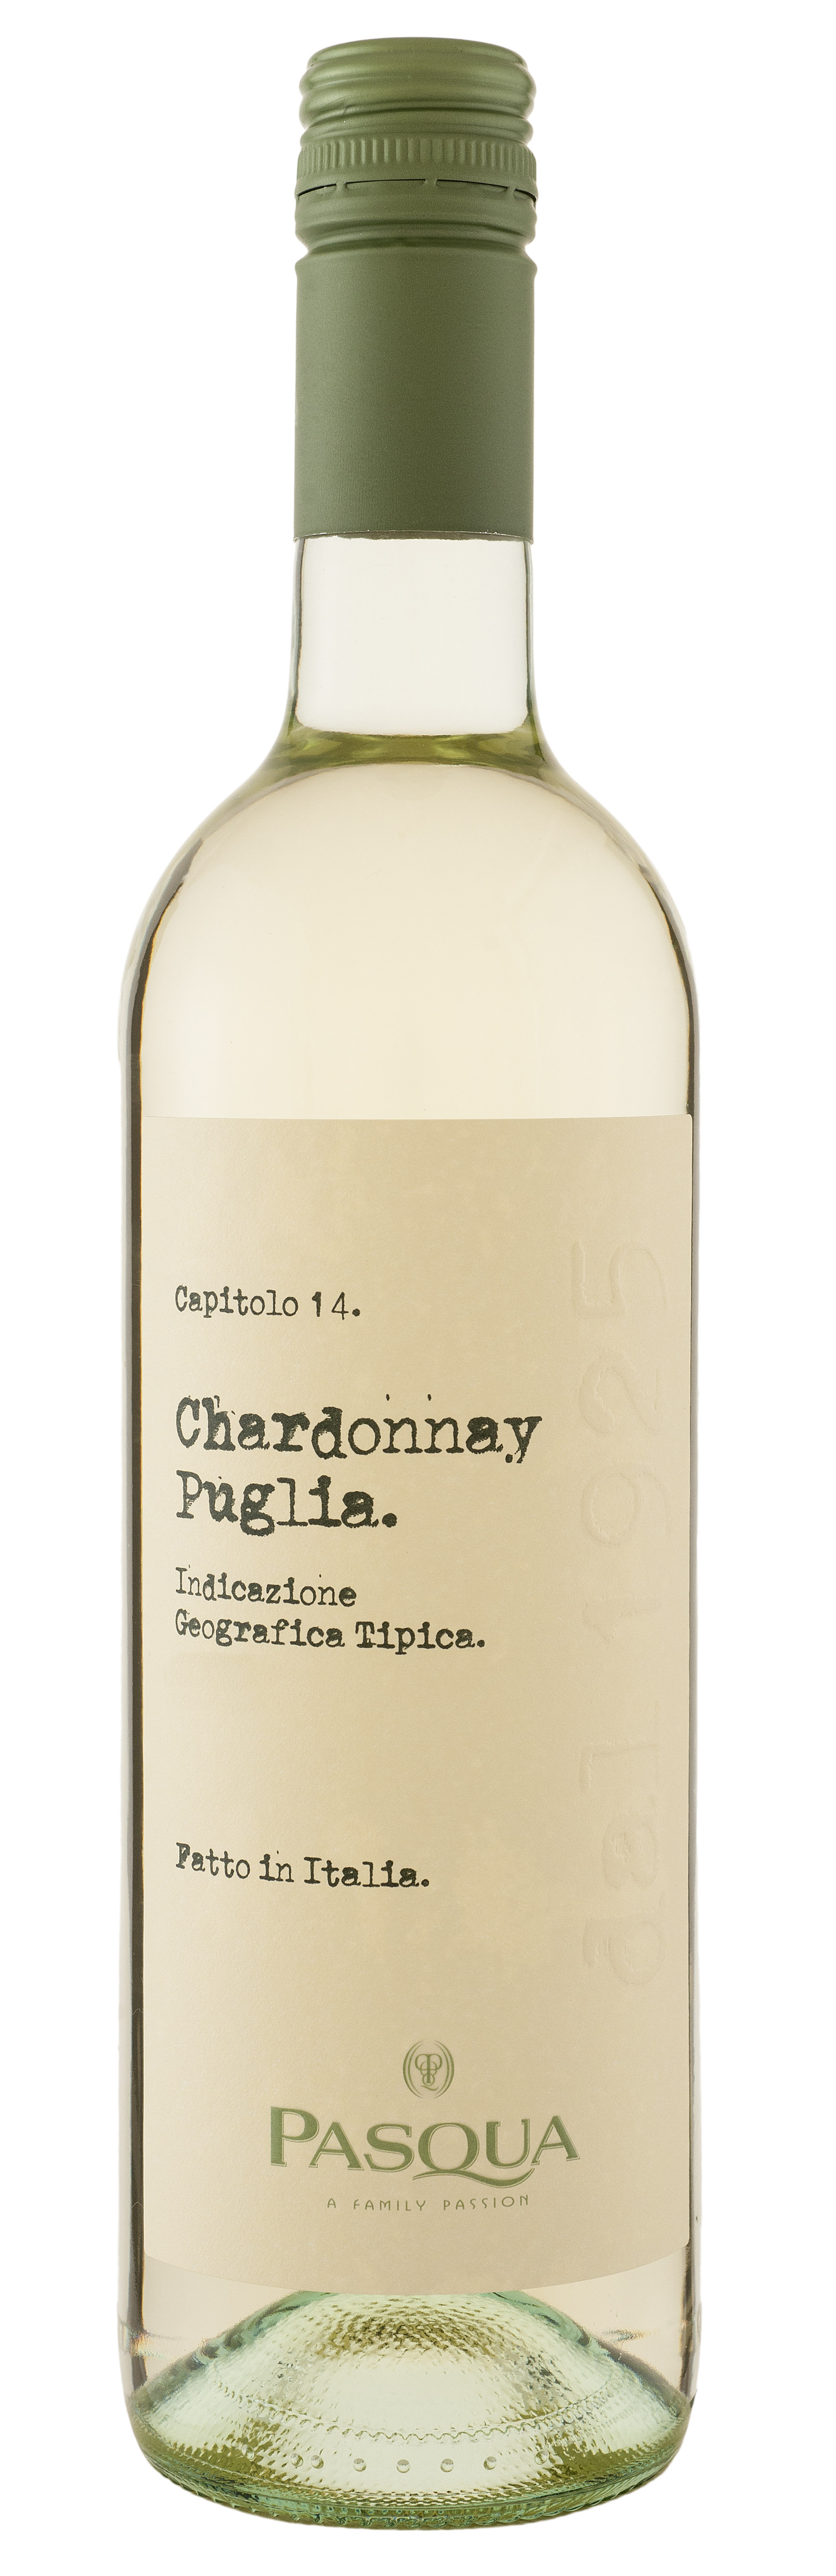 Pasqua chardonnay Puglia IGT 2020